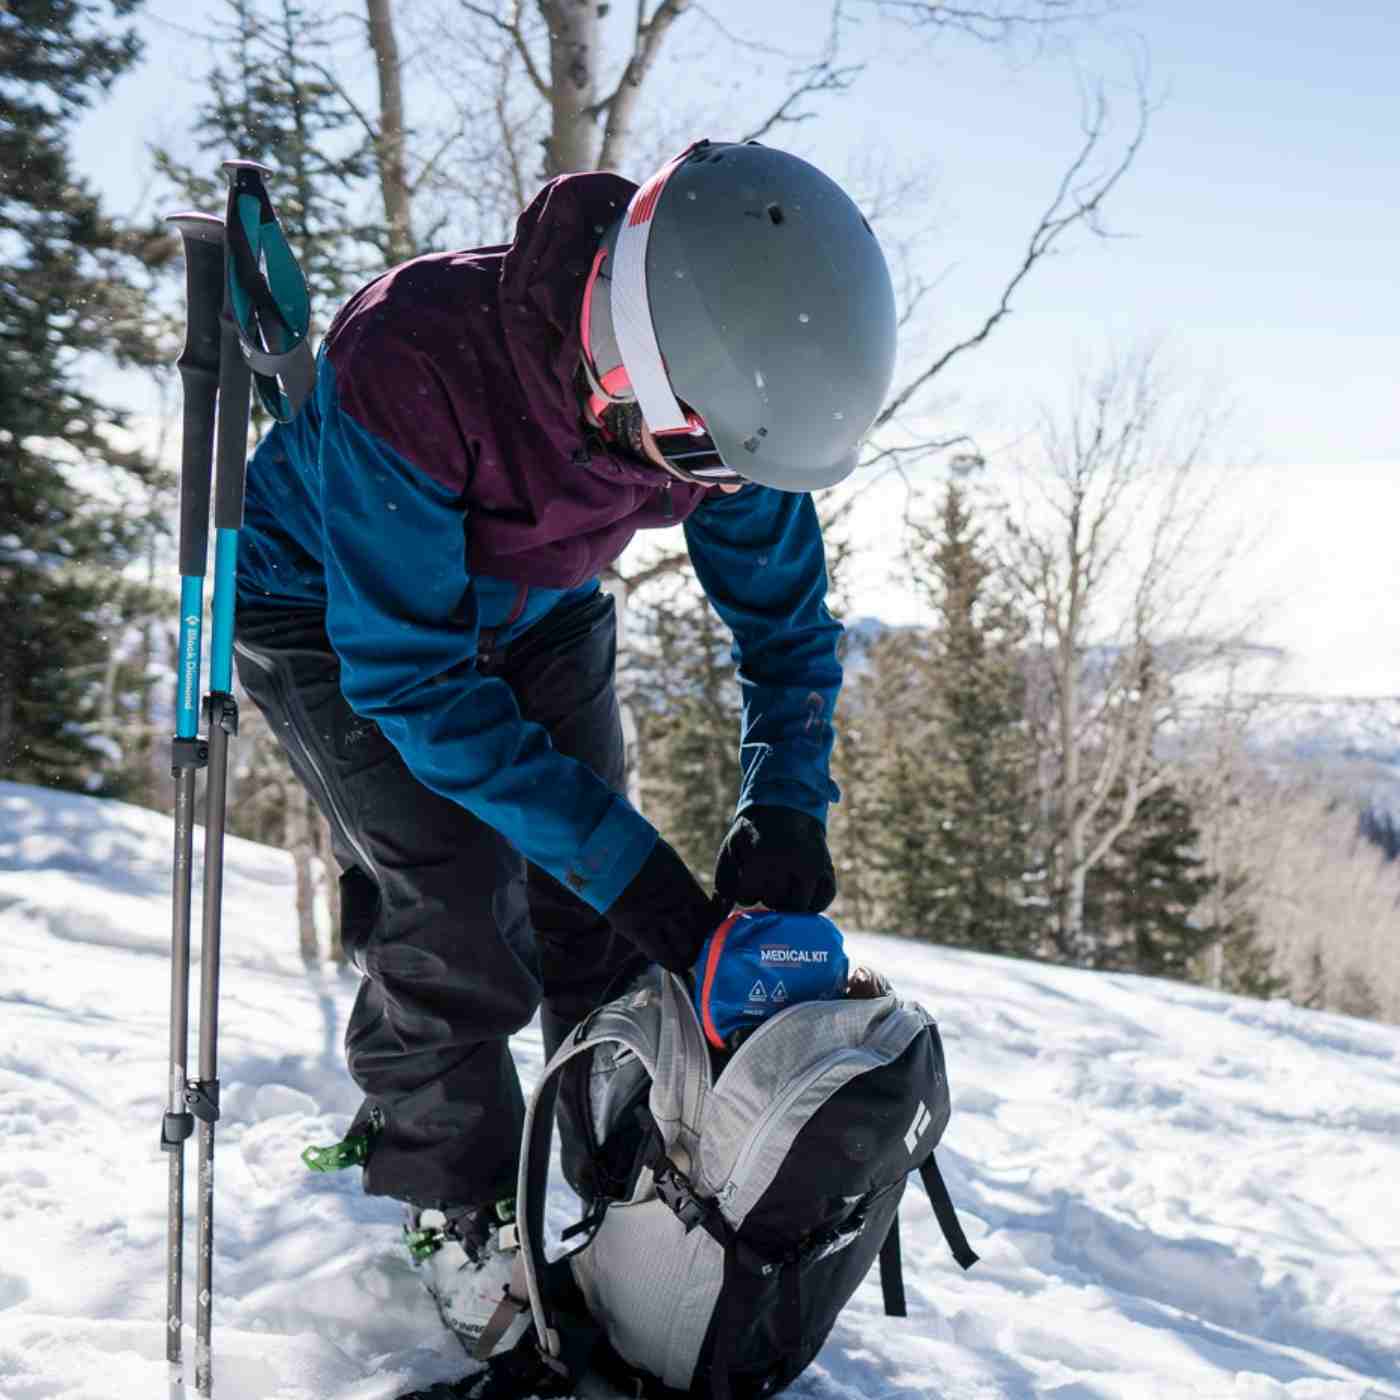 Mountain Series Medical Kit - Hiker skier removing kit from backpack